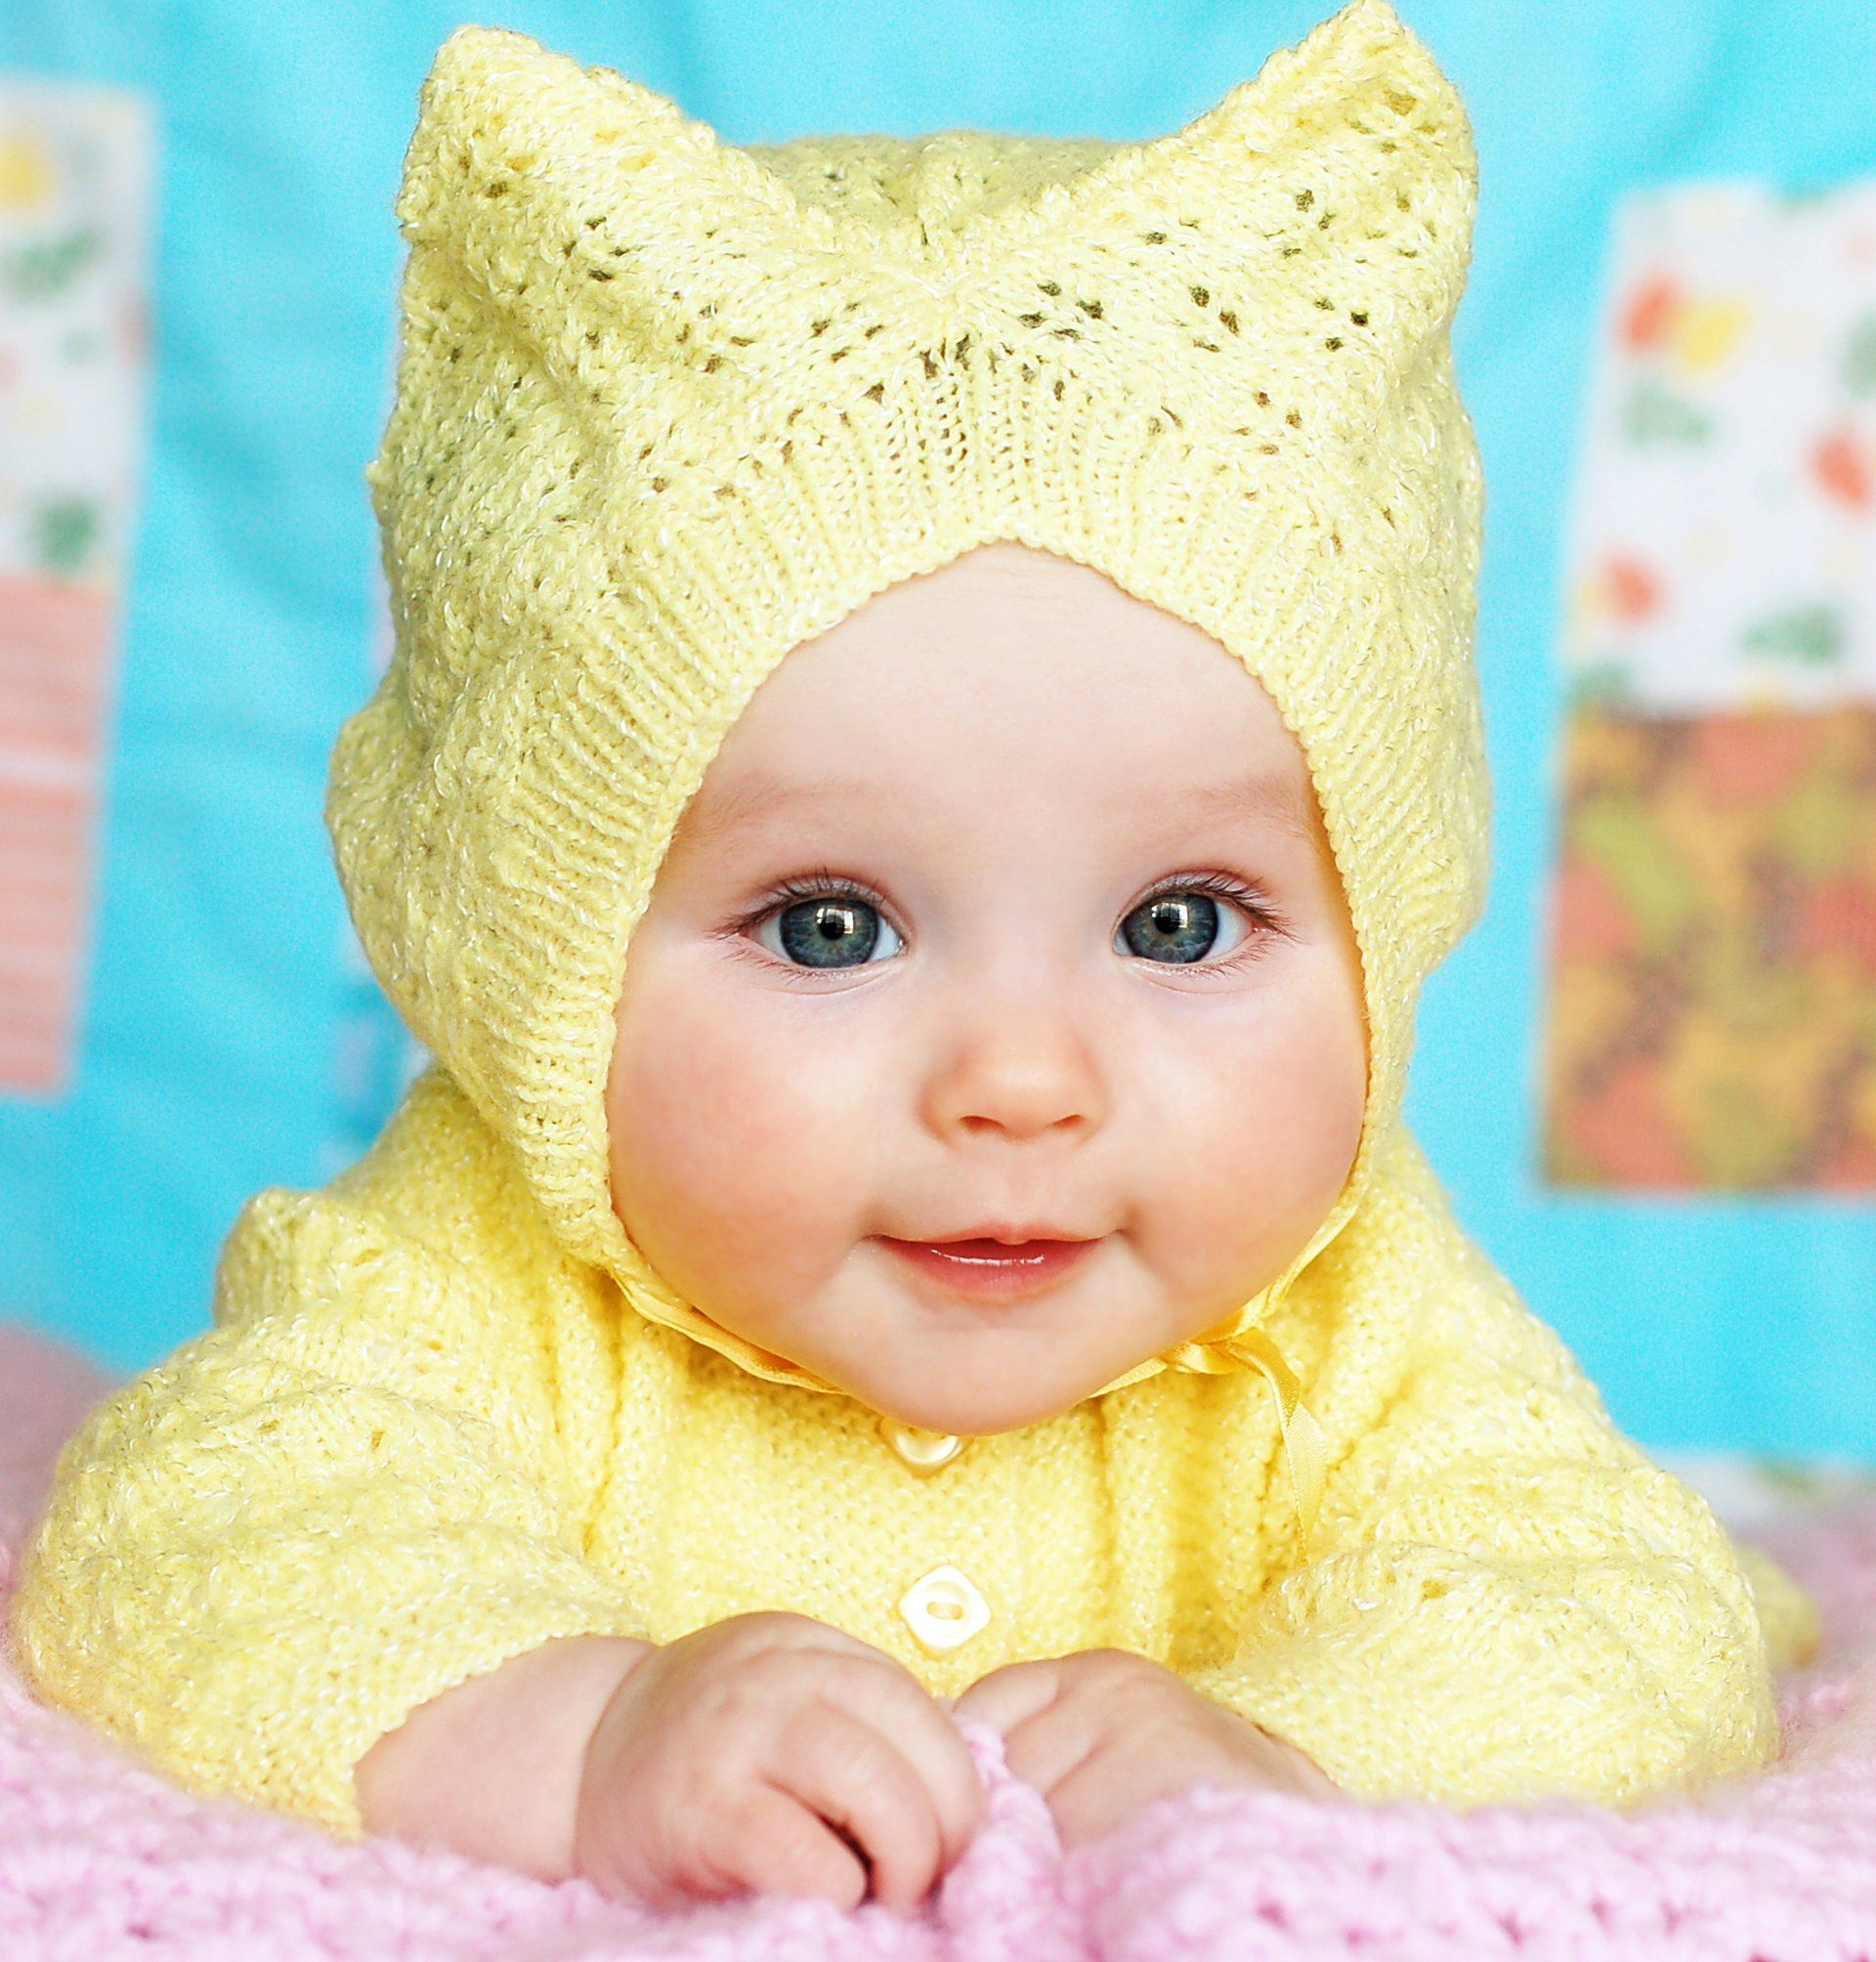 Cute Little Baby Wallpapers HD | Wallpapers For Desktop | Pinterest ...